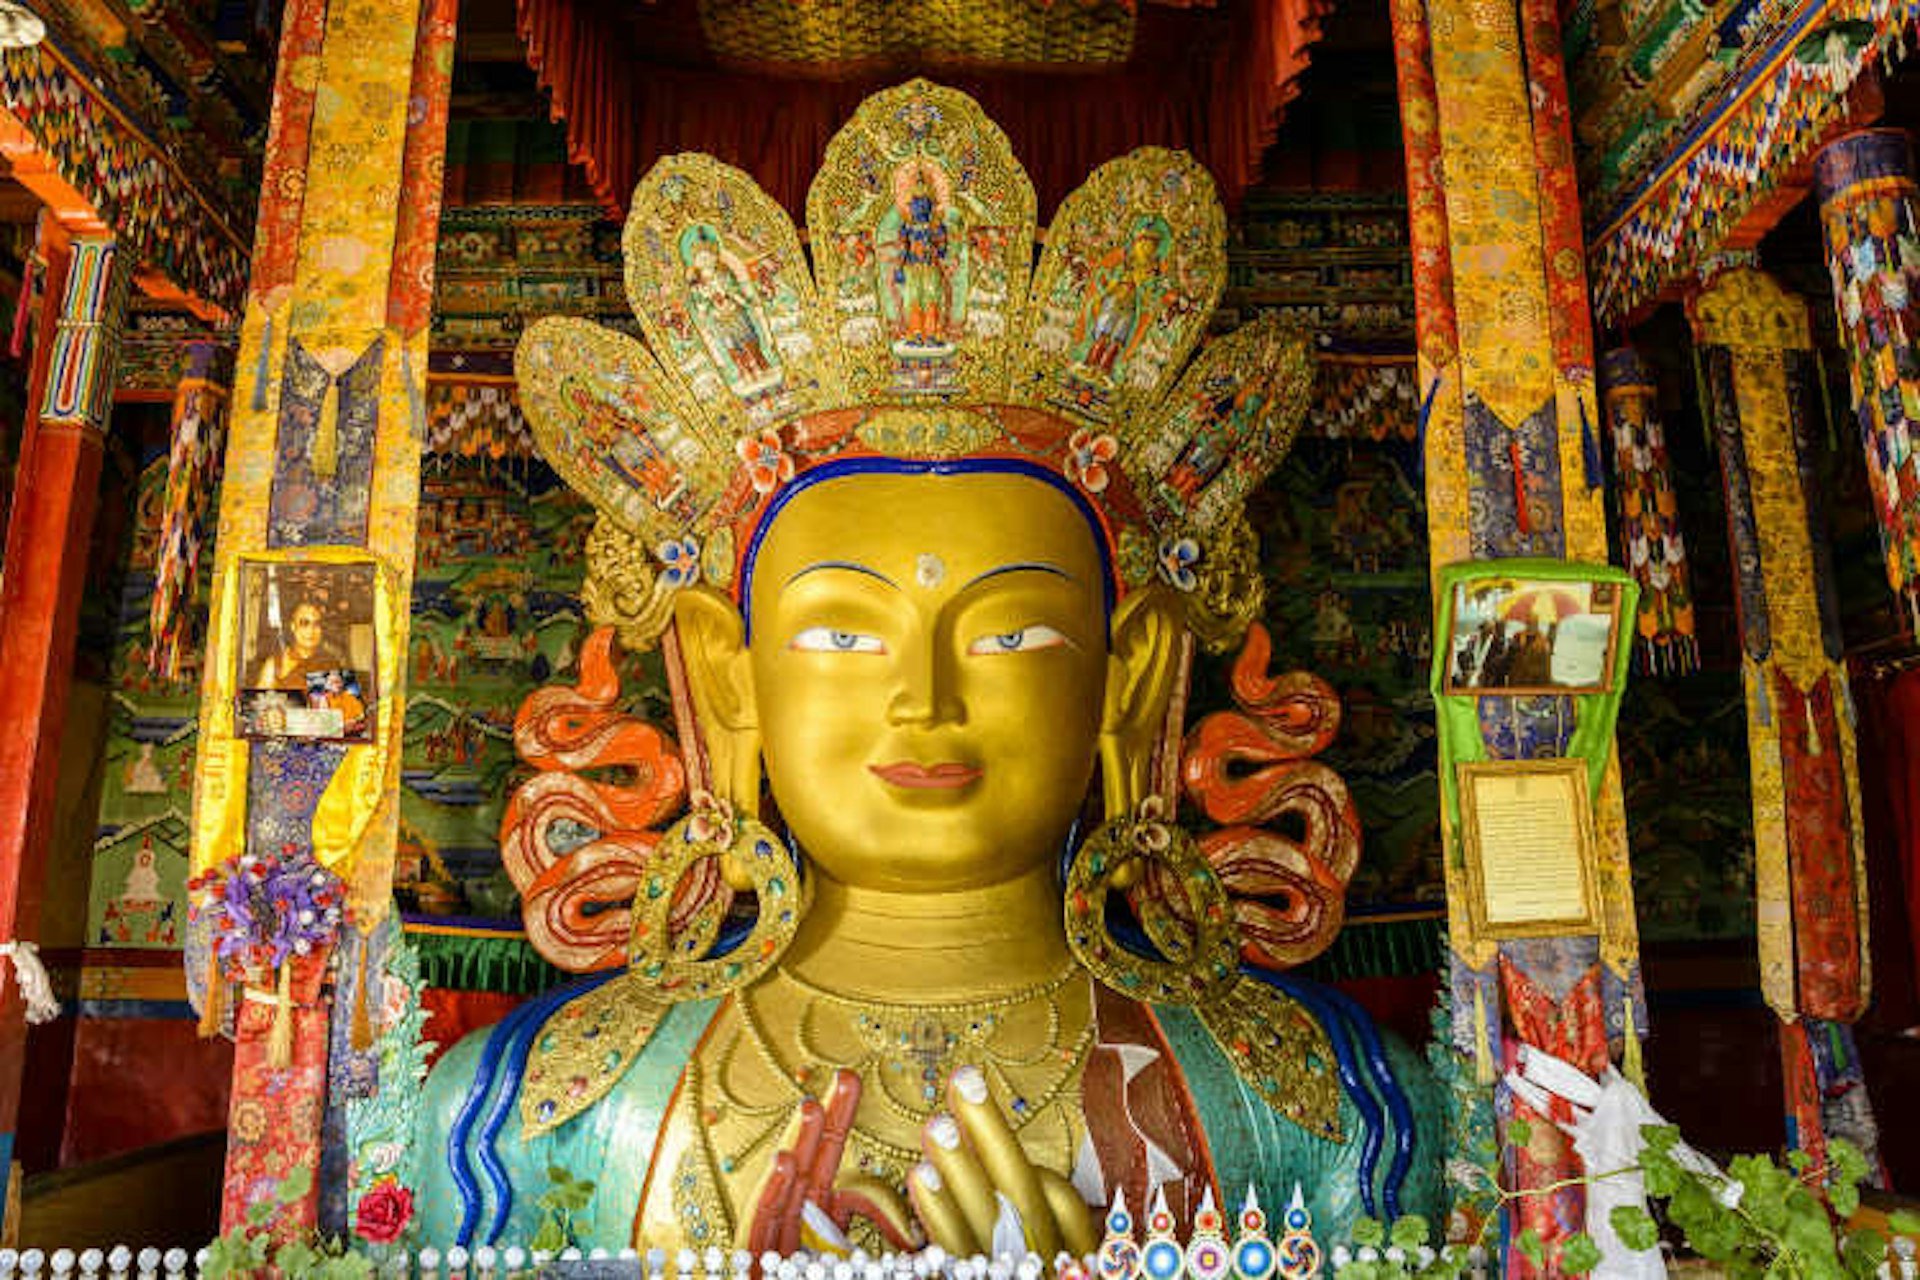 Maitreya Buddha at Thiksey Gompa, Ladakh. Image by Grant Dixon / Getty Images